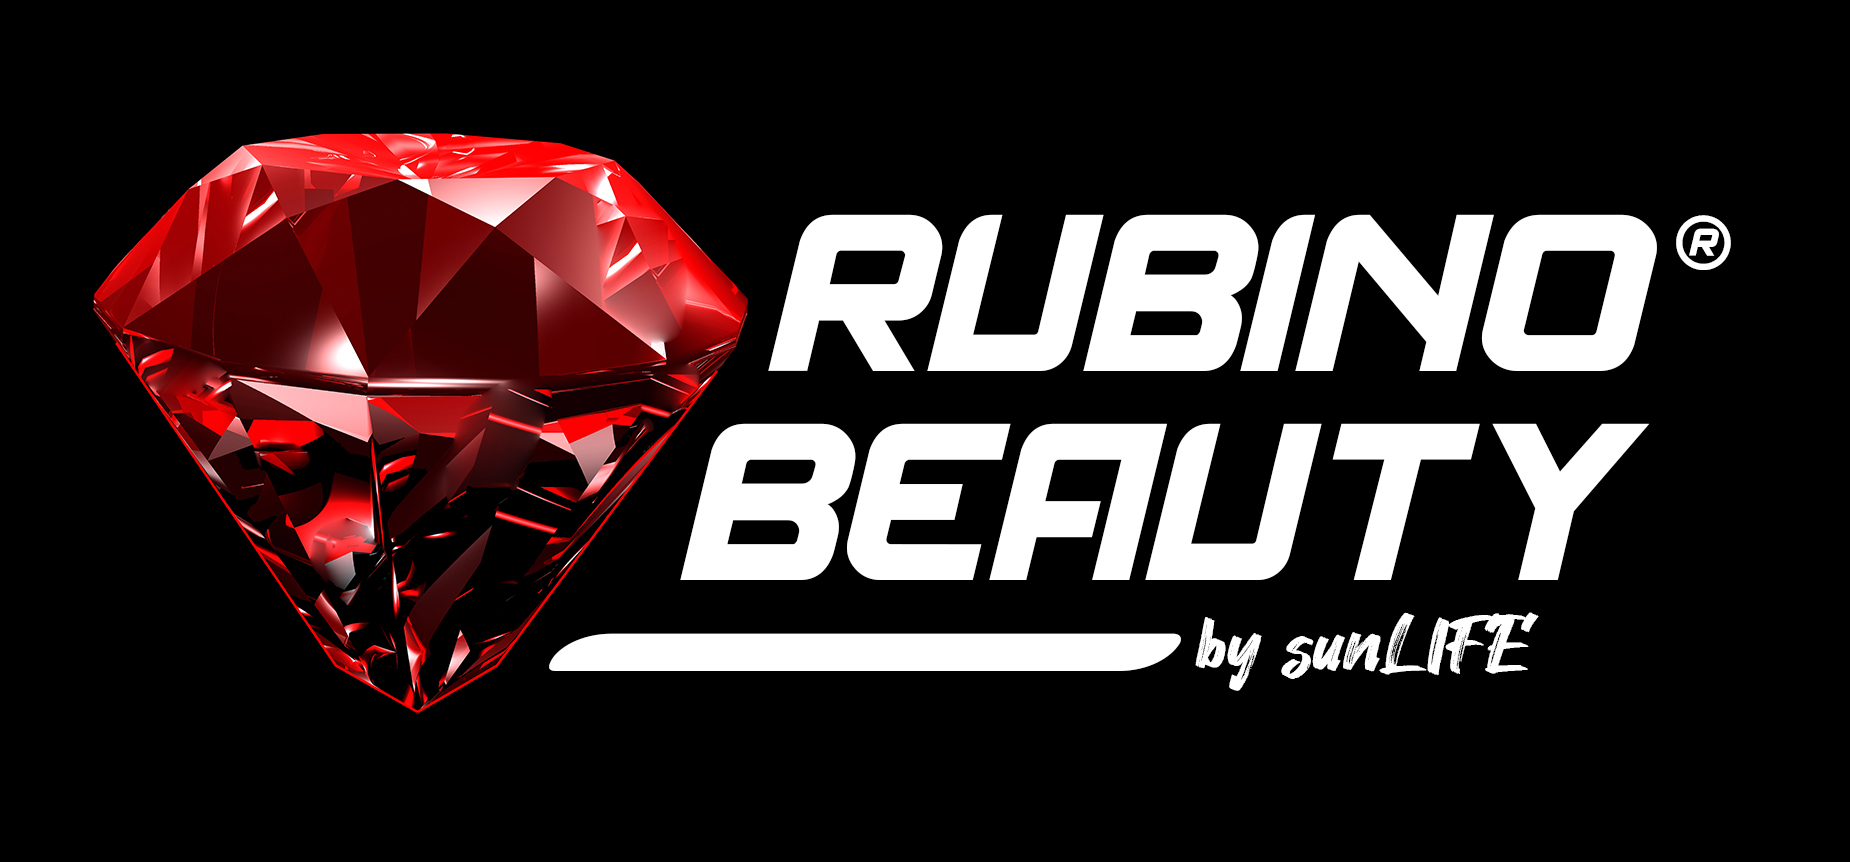 RUBINO BEAUTY by sunLIFE